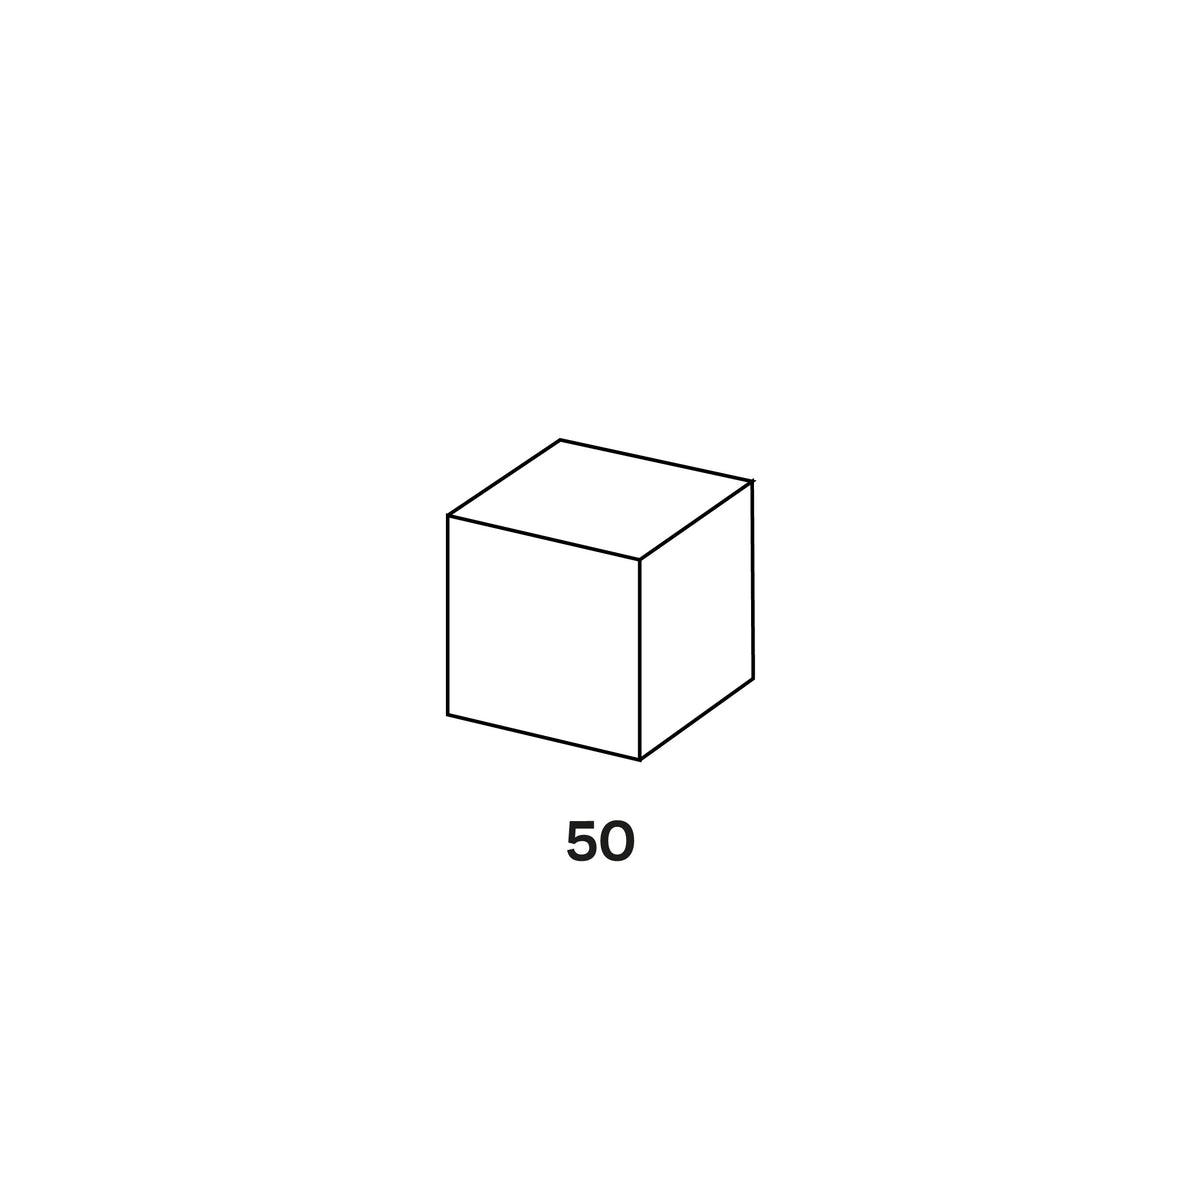 Cubos magnéticos | Imacubix 50 piezas - IMANIX